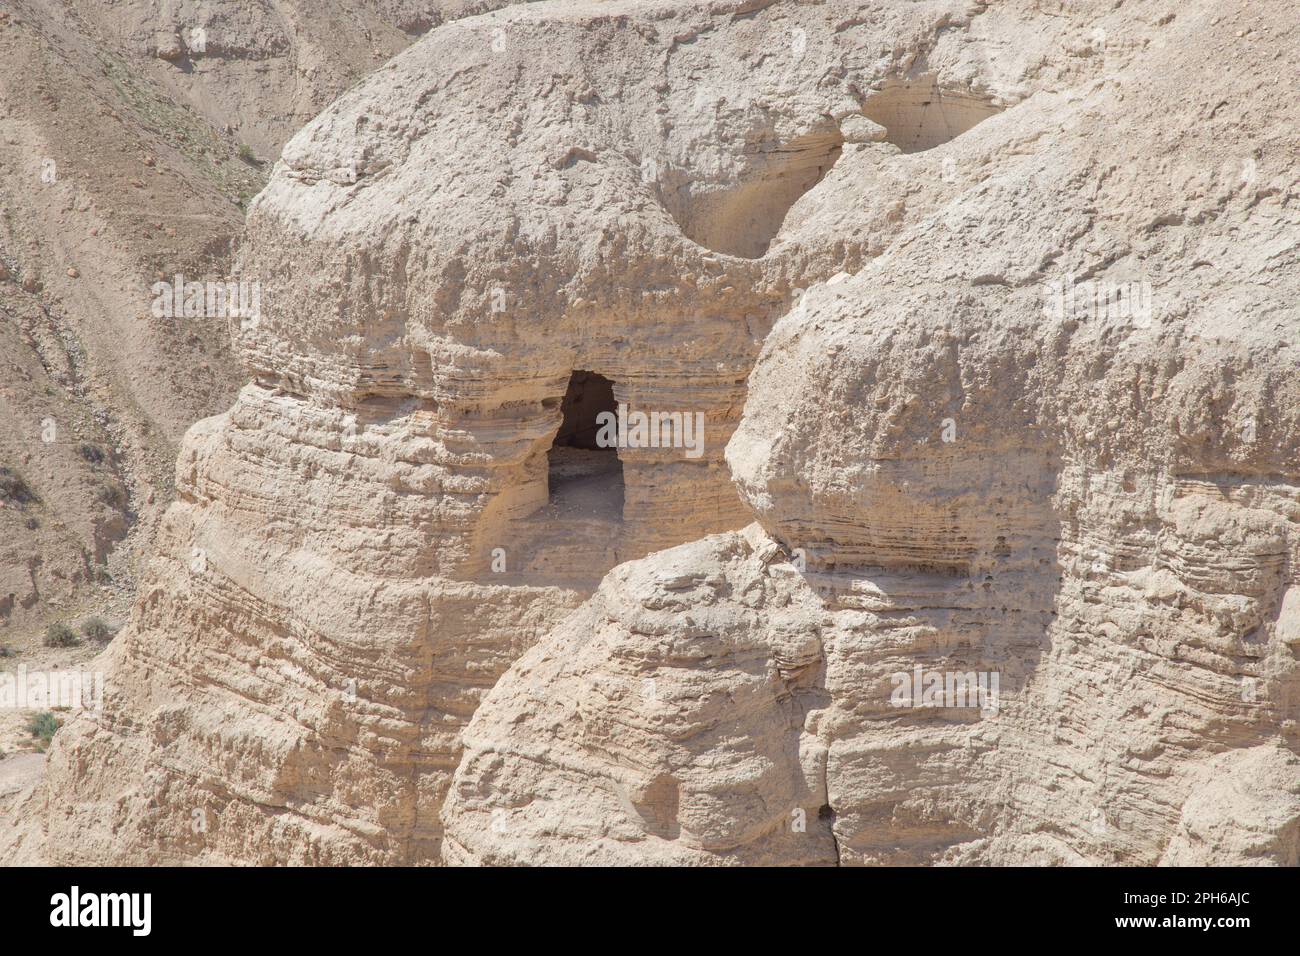 Grottes du parc national de Qumran, Israël Banque D'Images